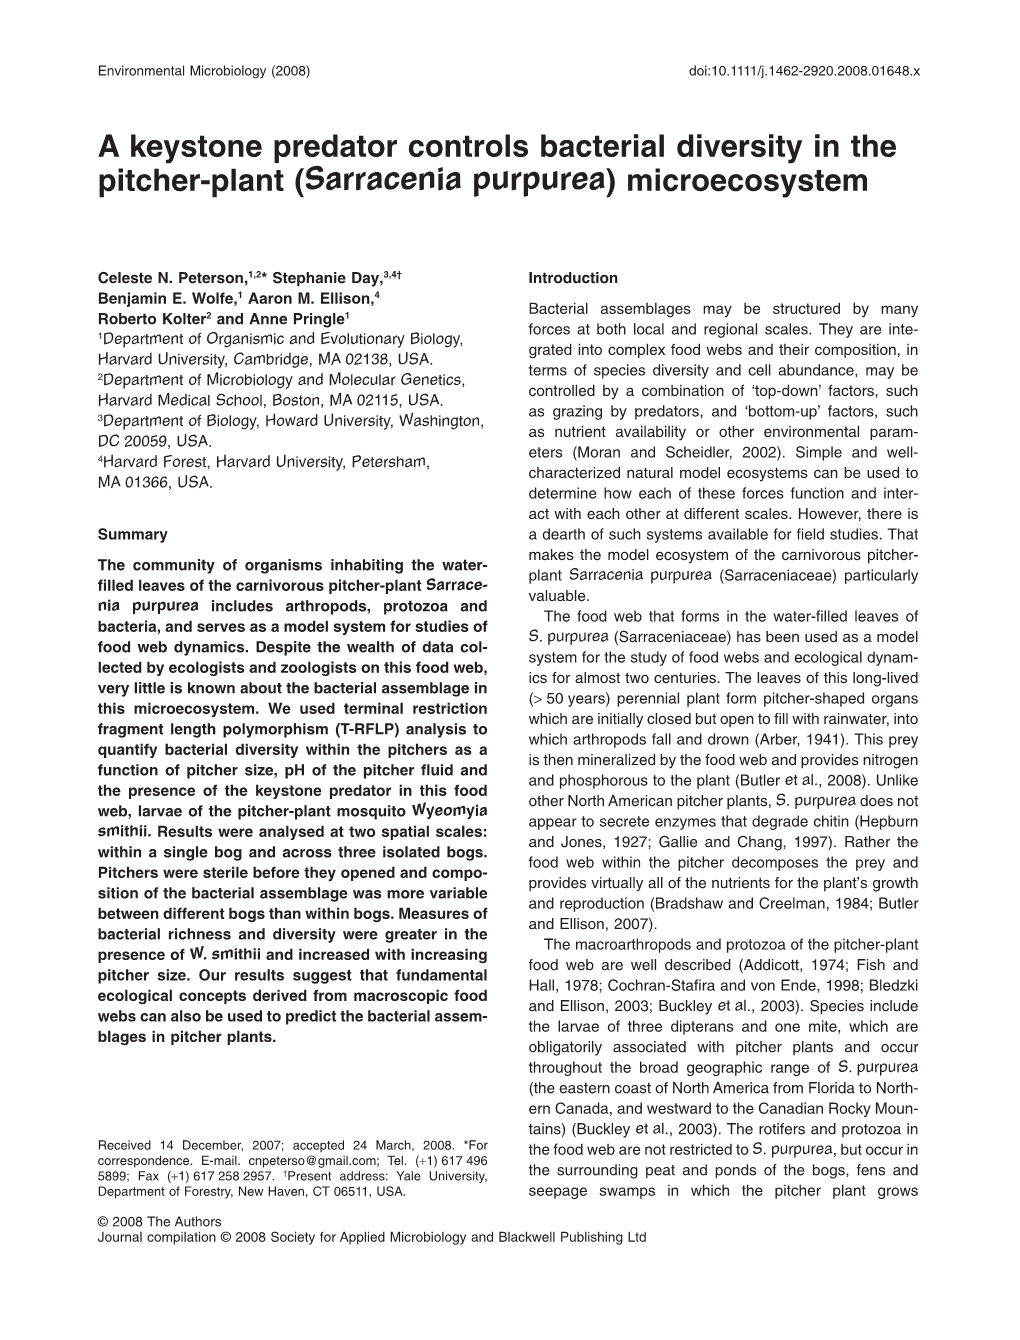 A Keystone Predator Controls Bacterial Diversity in the Pitcher-Plant (Sarracenia Purpurea) Microecosystem